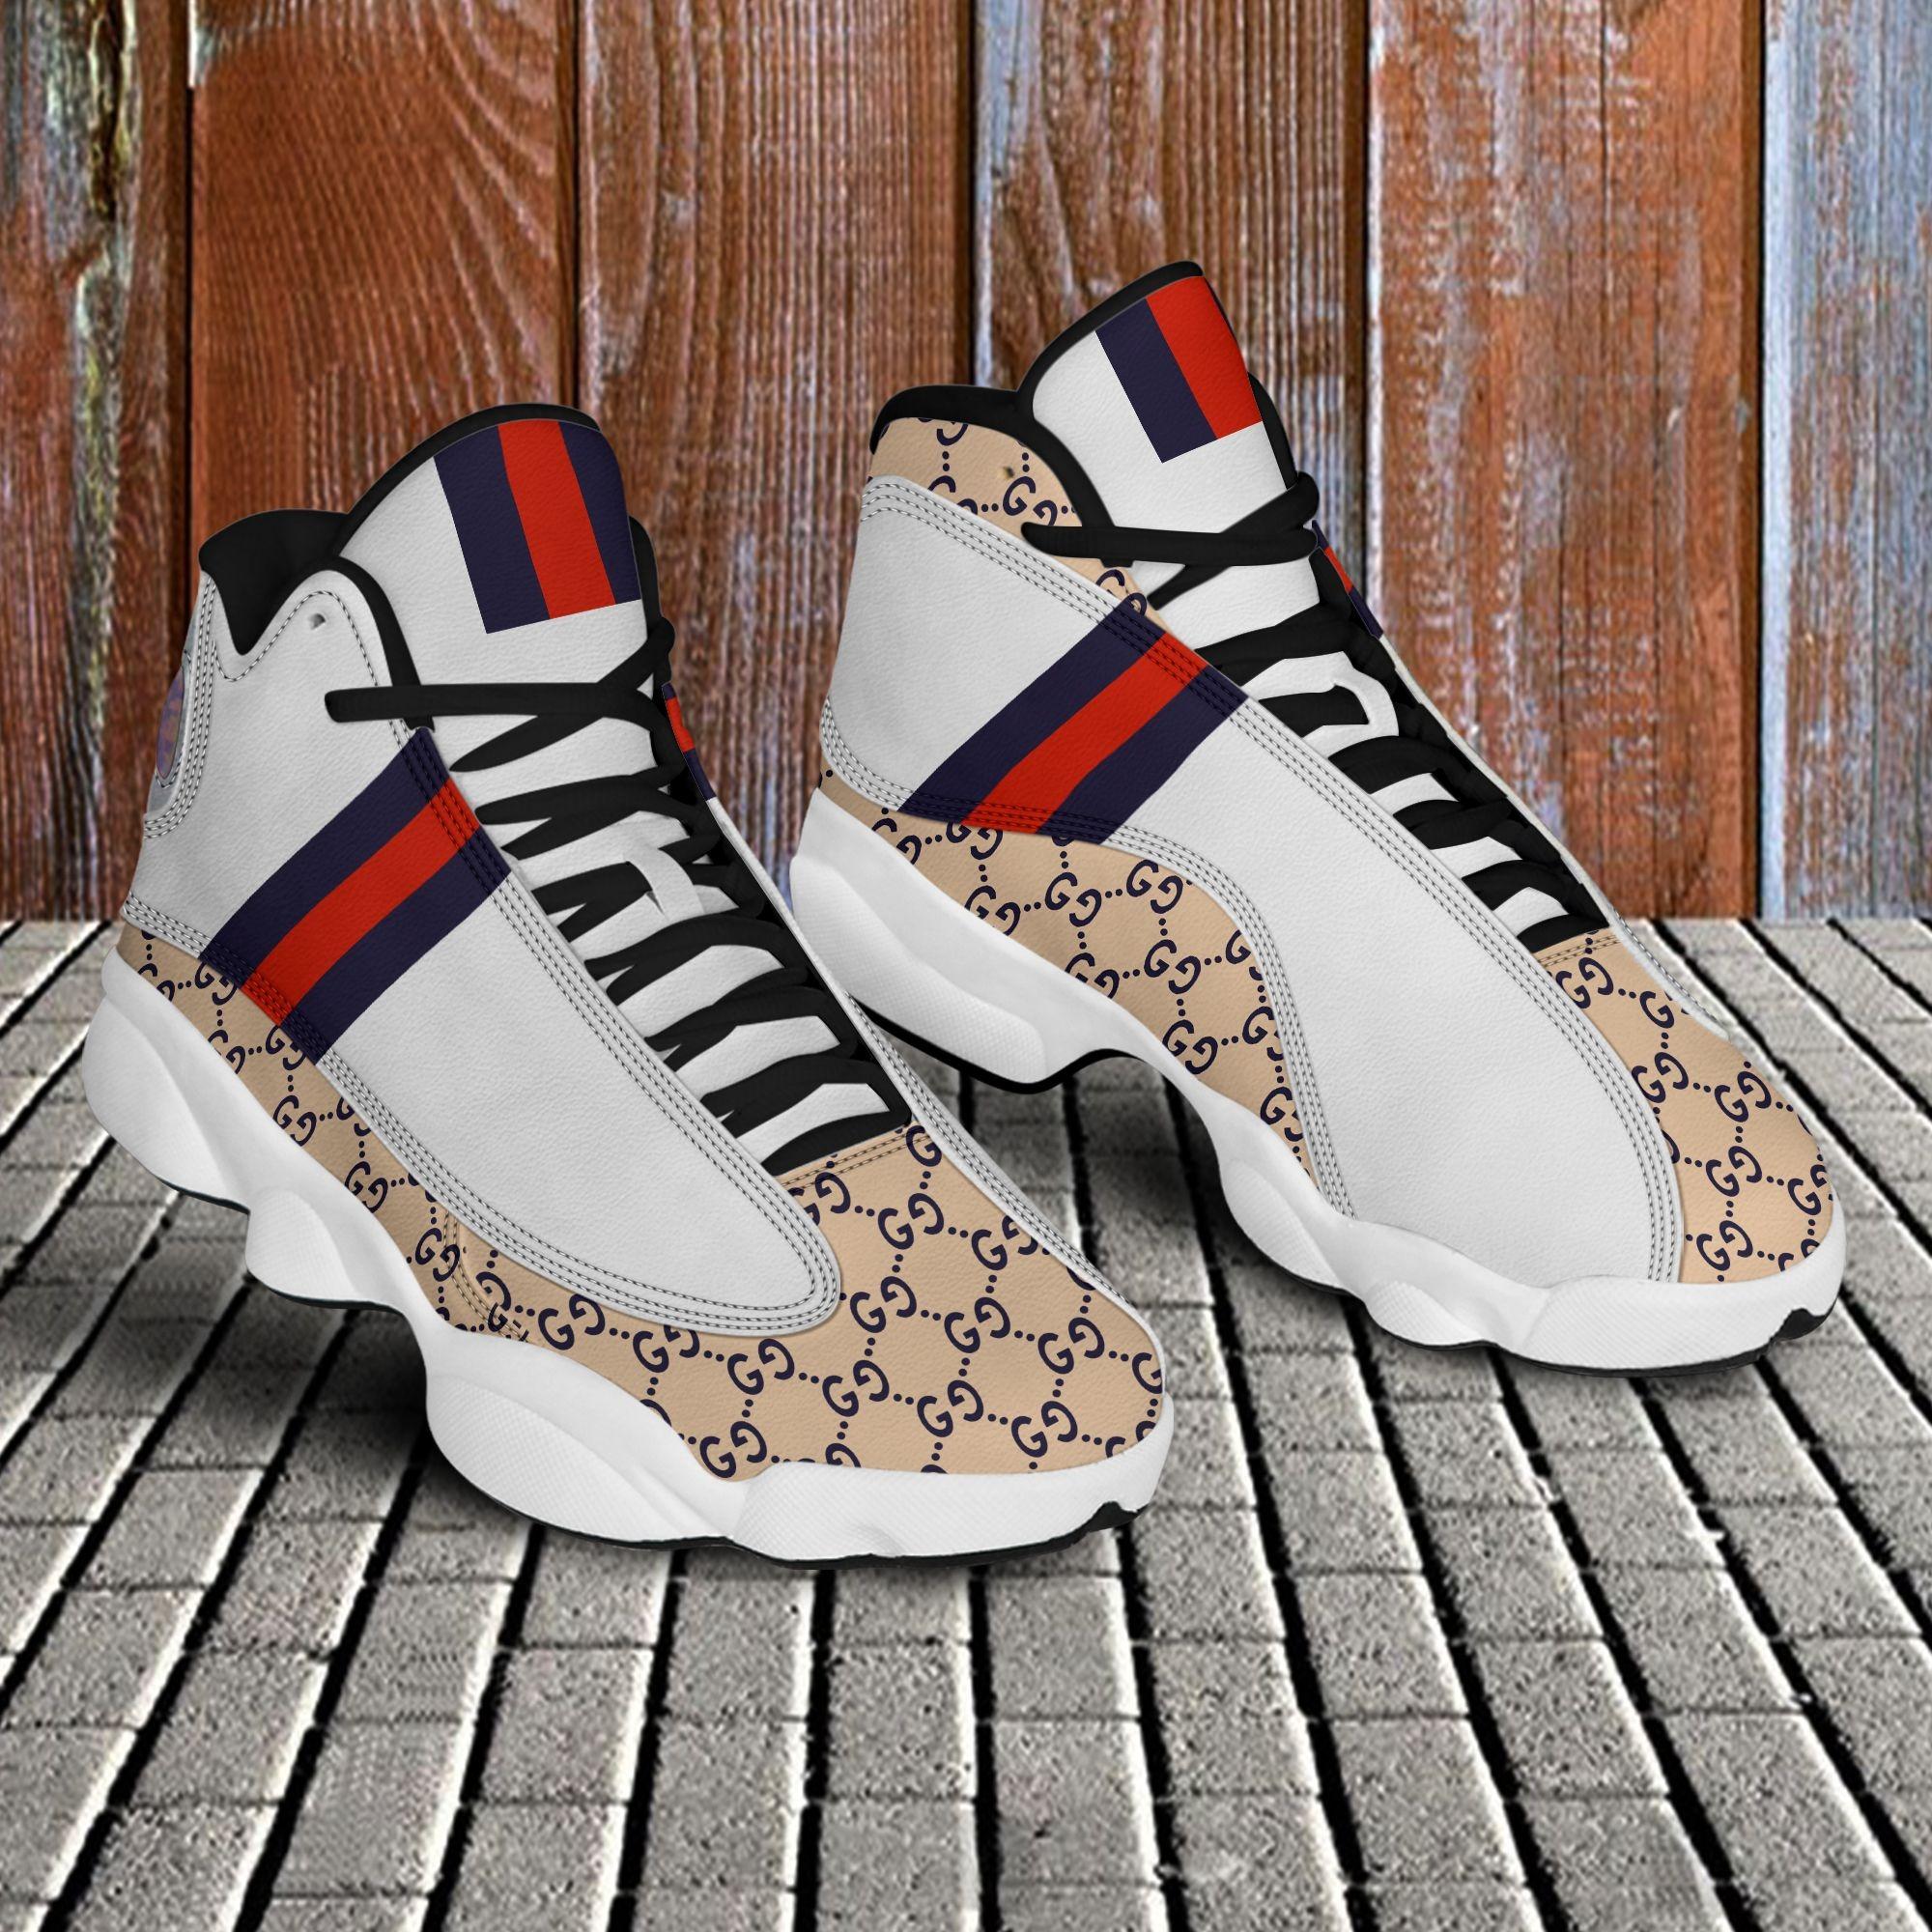 Gucci Air Jordan 13 Couture GC Sneaker Hot 2022 Sneaker JD14458 – Let the  colors inspire you!